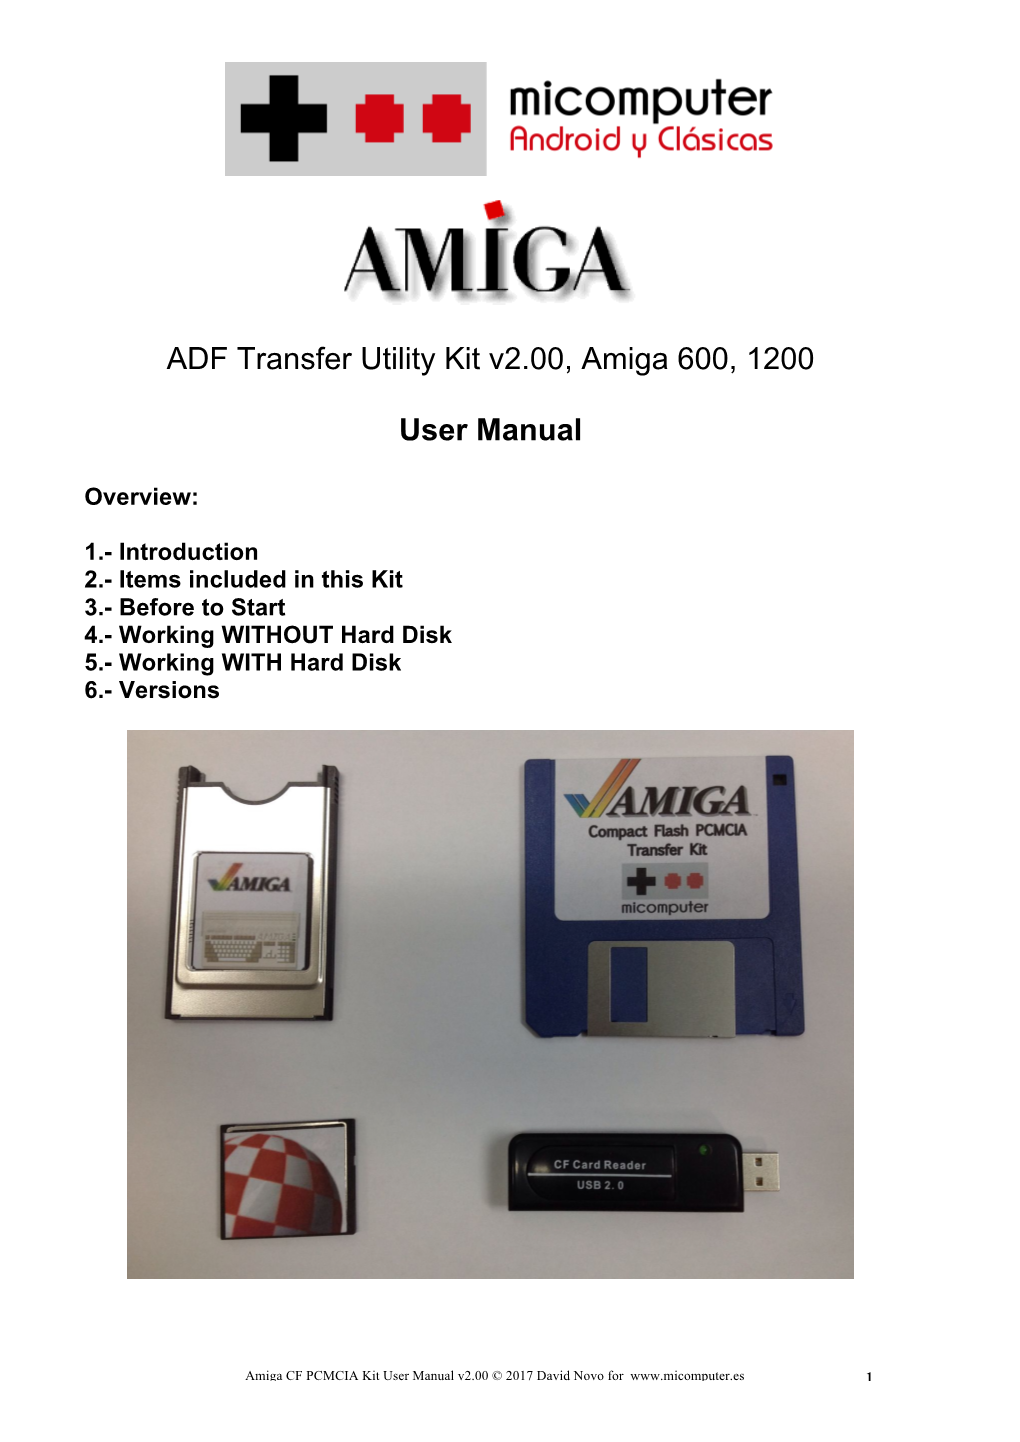 ADF Transfer Utility Kit V2.00, Amiga 600, 1200 User Manual